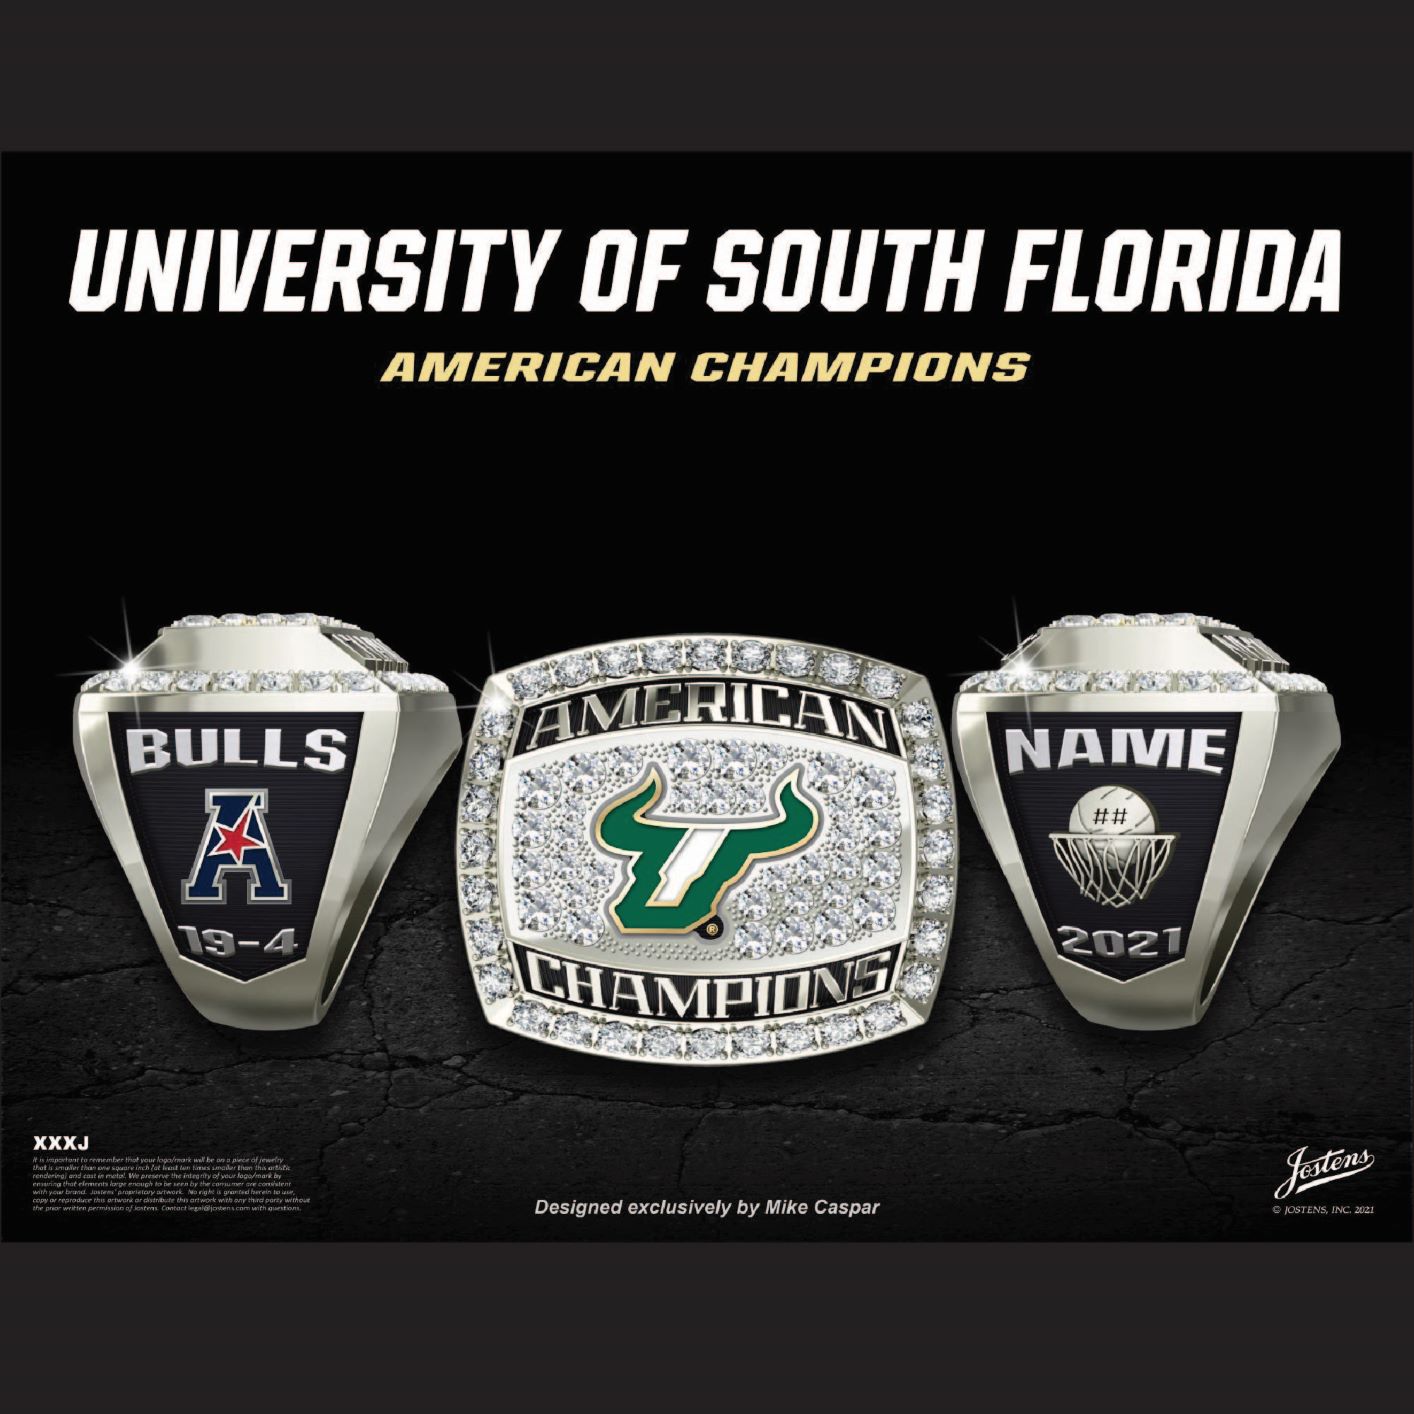 University of South Florida Women's Basketball 2021 American Championship Ring